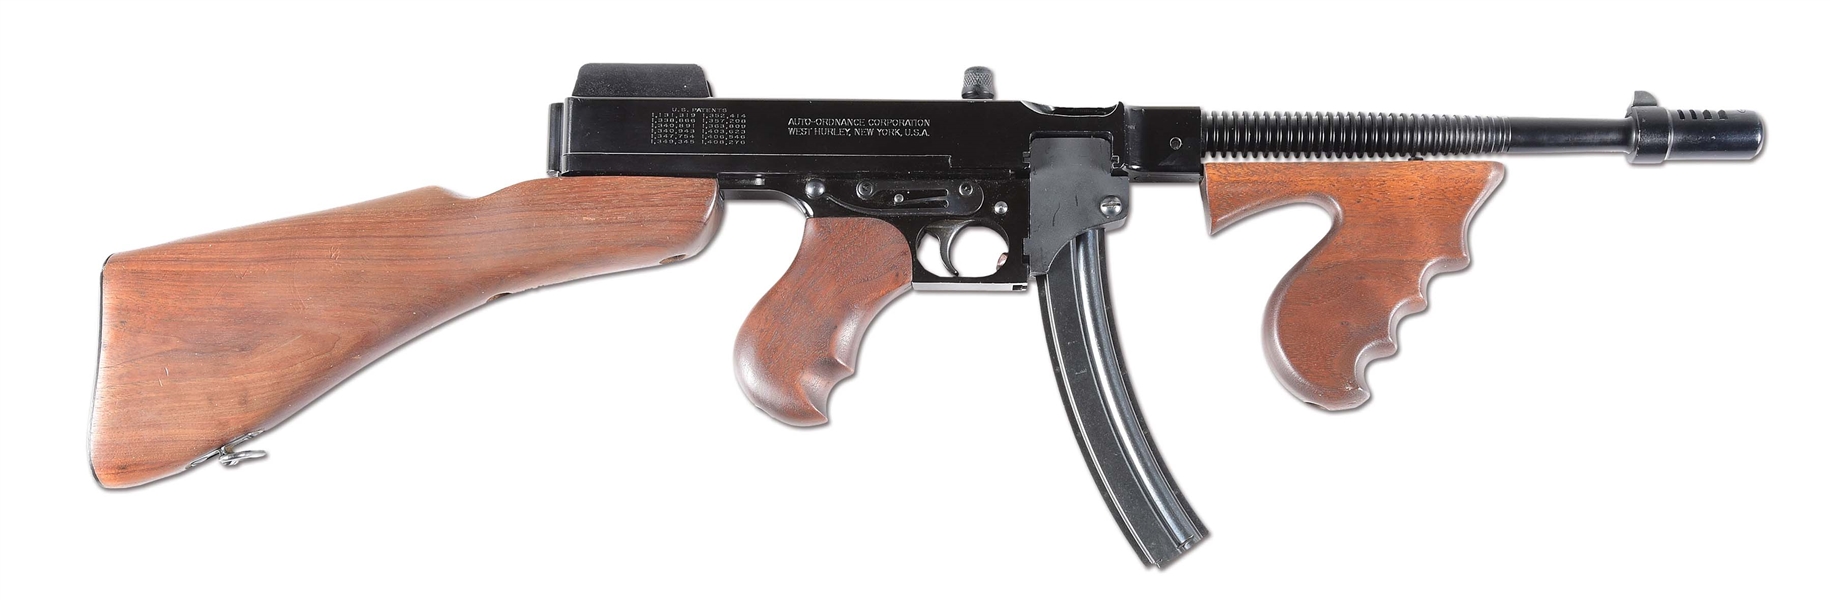 (N) DESIRABLE AUTO ORDNANCE THOMPSON MODEL 1928 A22 .22 LR SUBMACHINE GUN (FULLY TRANSFERABLE).